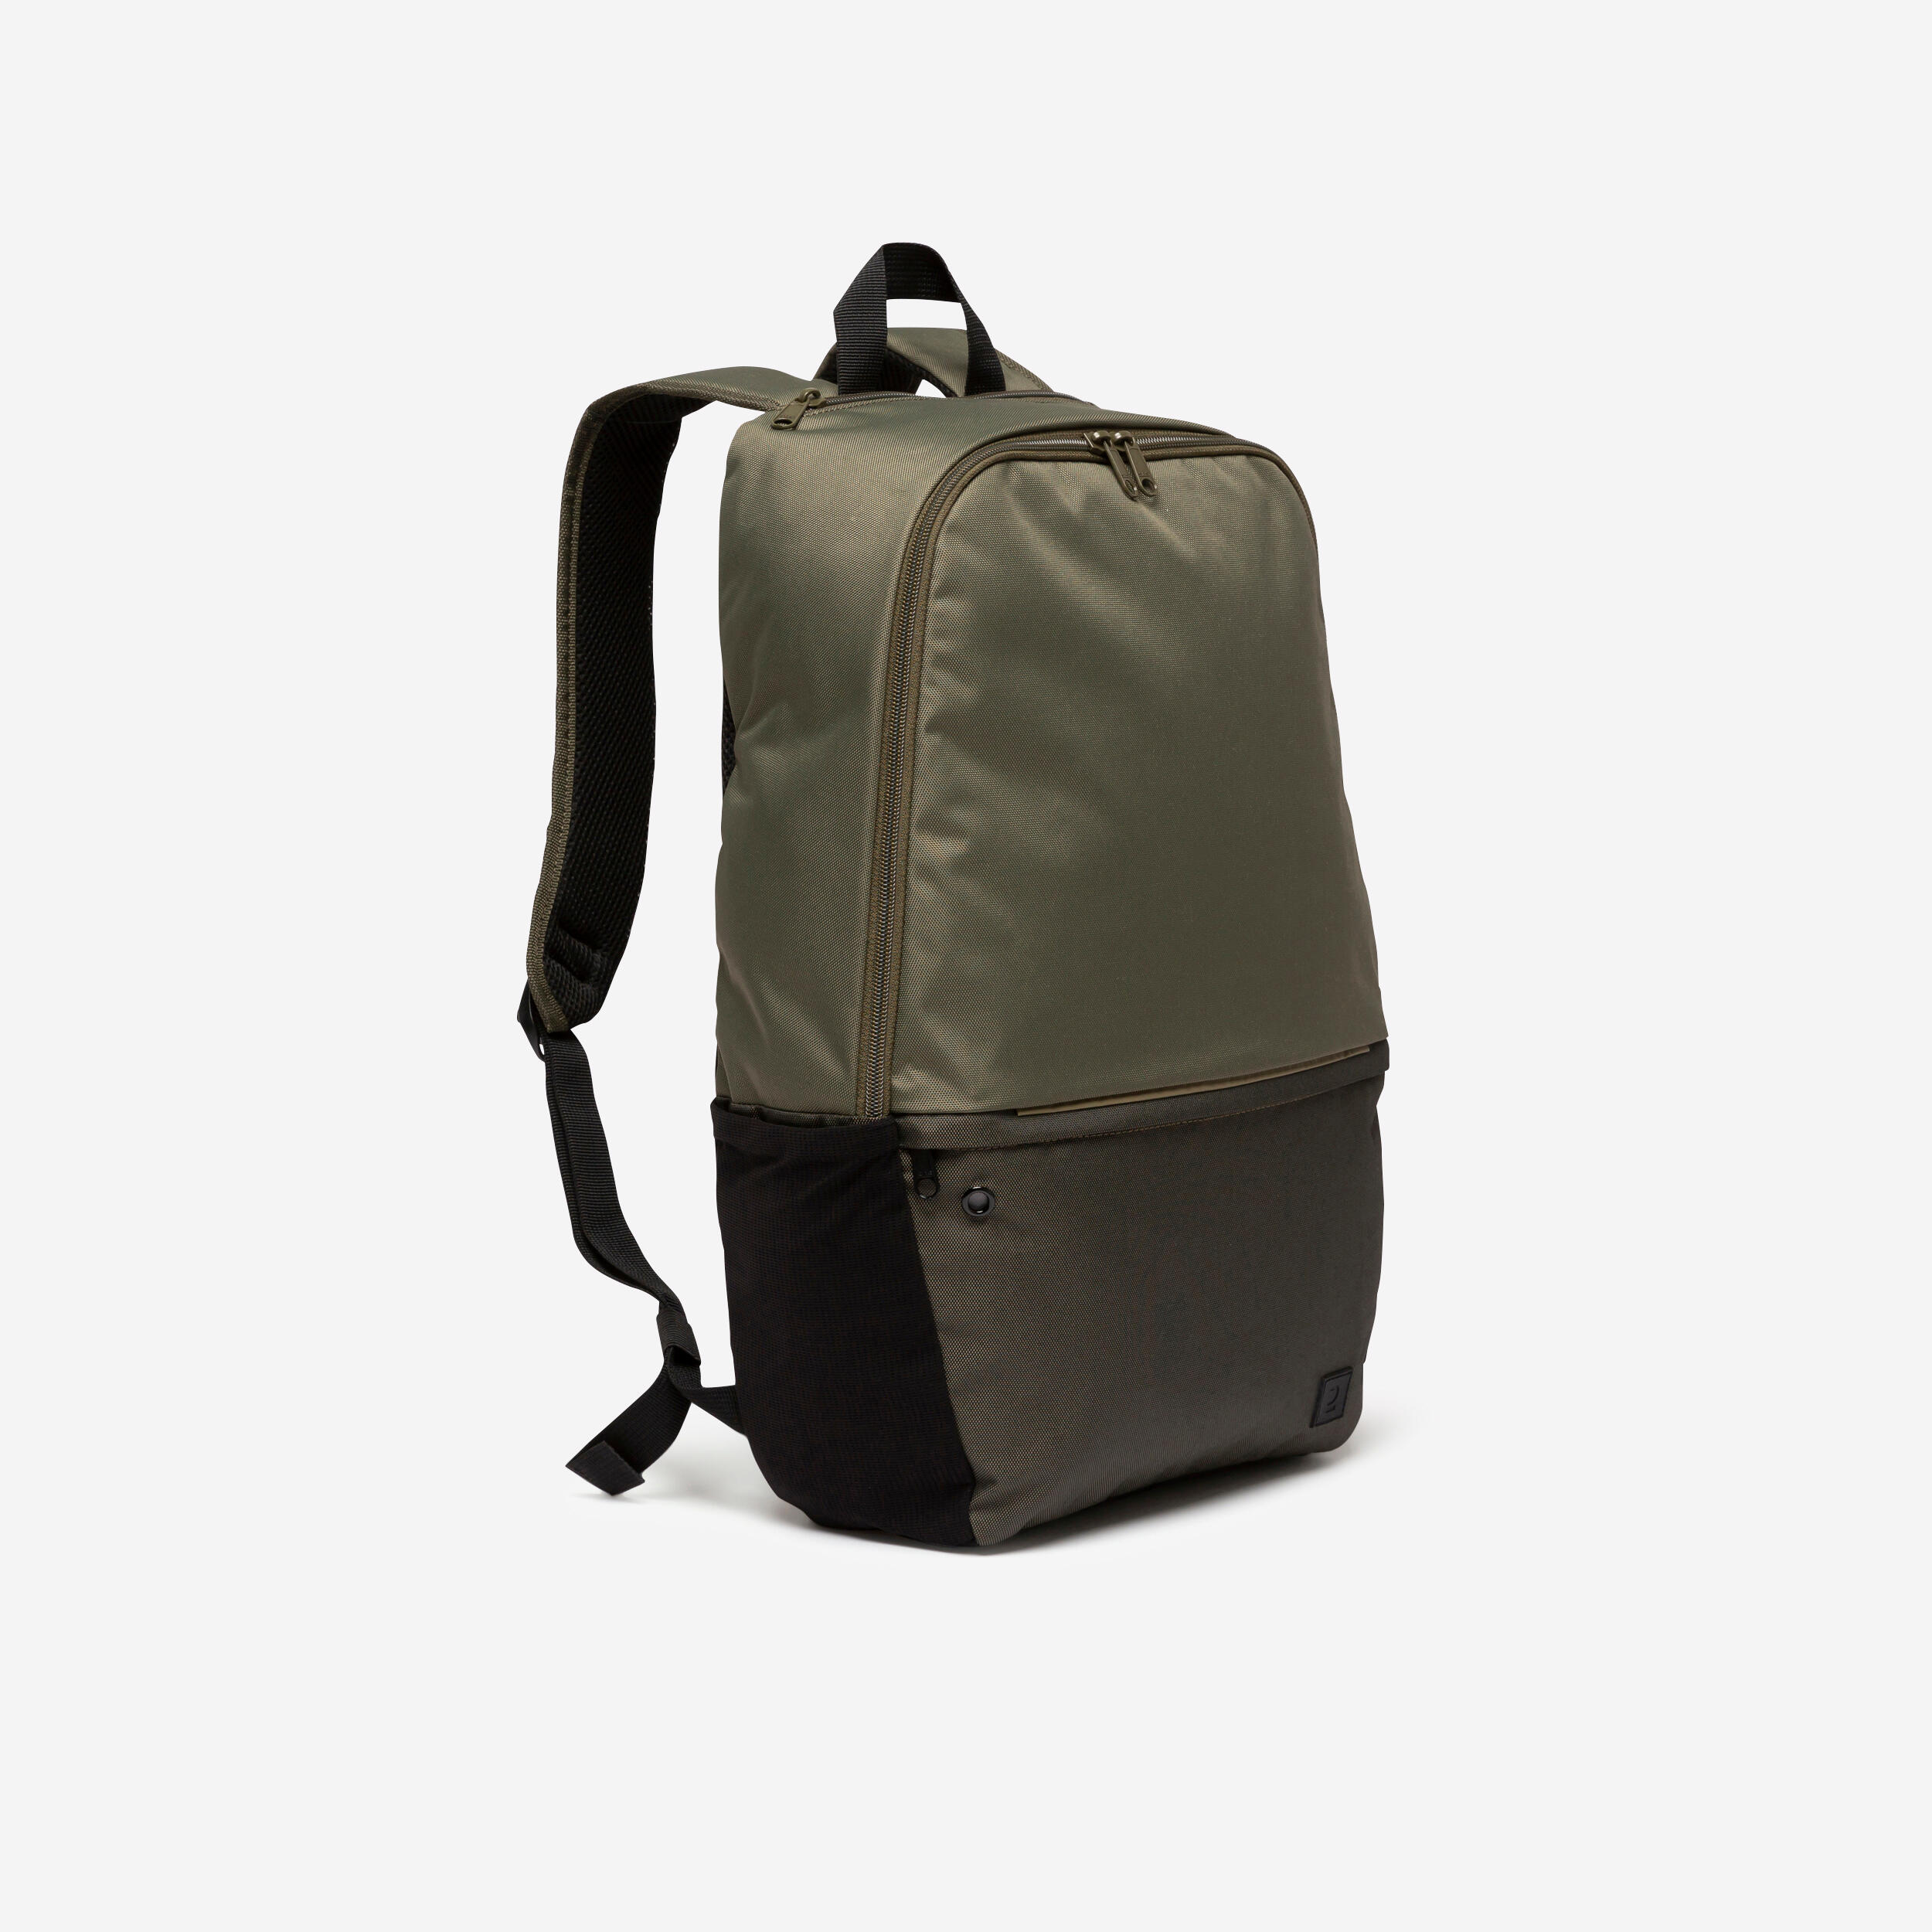 24L Backpack Essential - Khaki 1/9